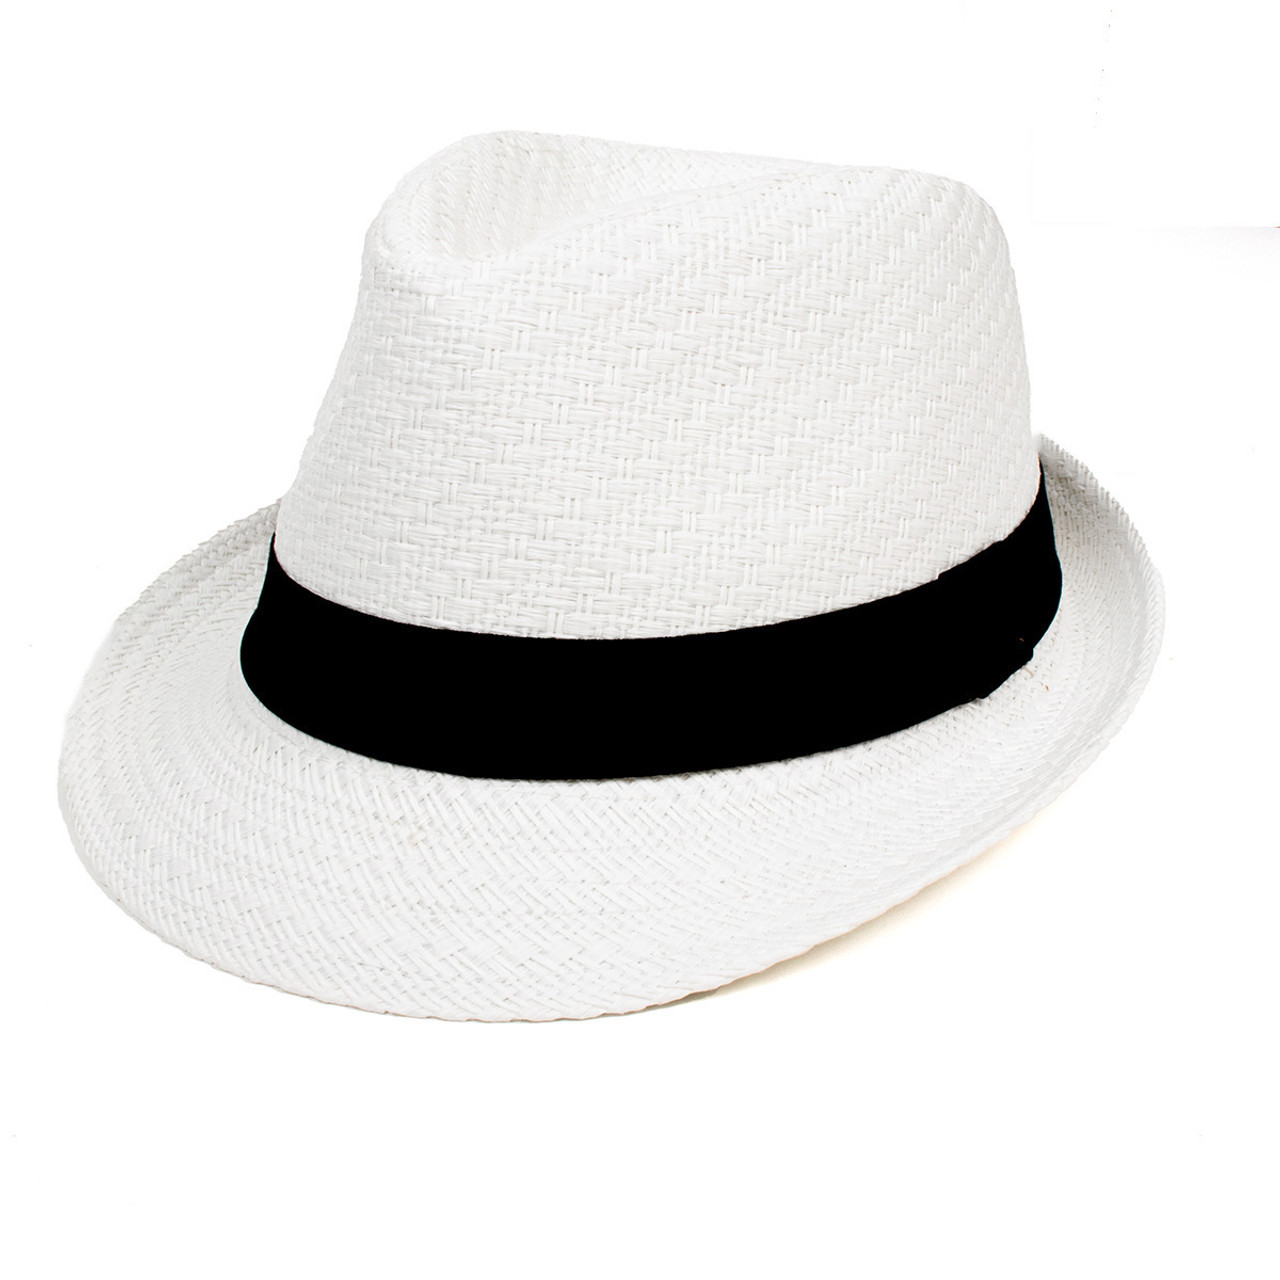 Men's spring summer outfit with beige plain hat, black plain